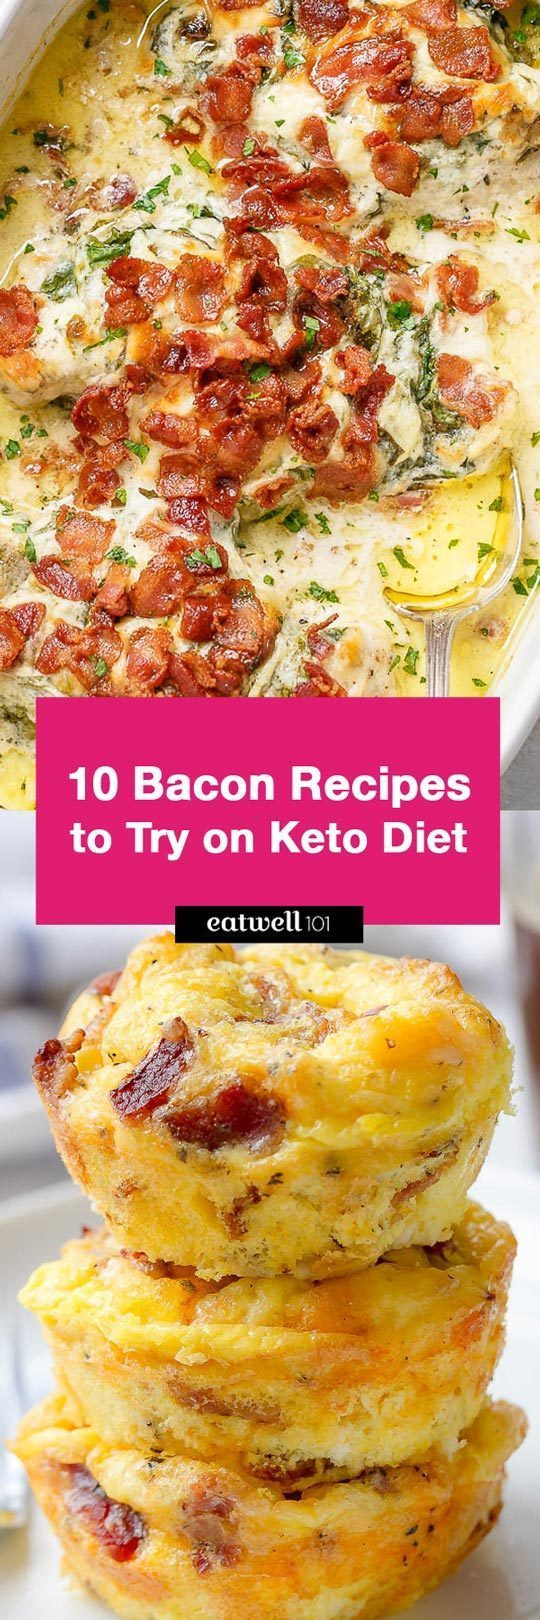 Bacon Keto Diet
 Keto Bacon Recipes 11 Delish Ways to Enjoy Bacon on Keto